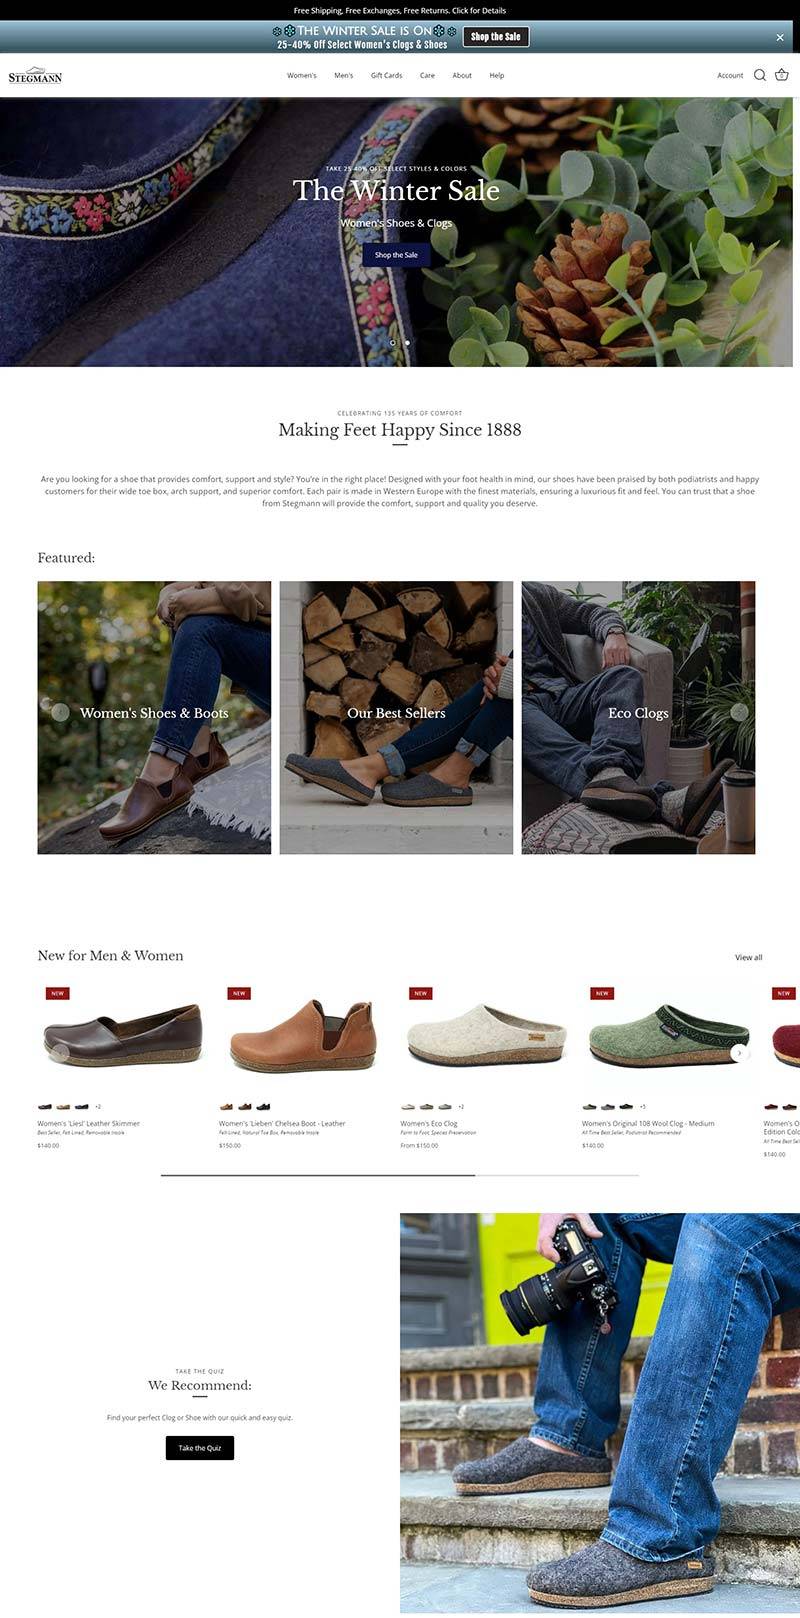 Stegmann 美国羊毛鞋品牌购物网站